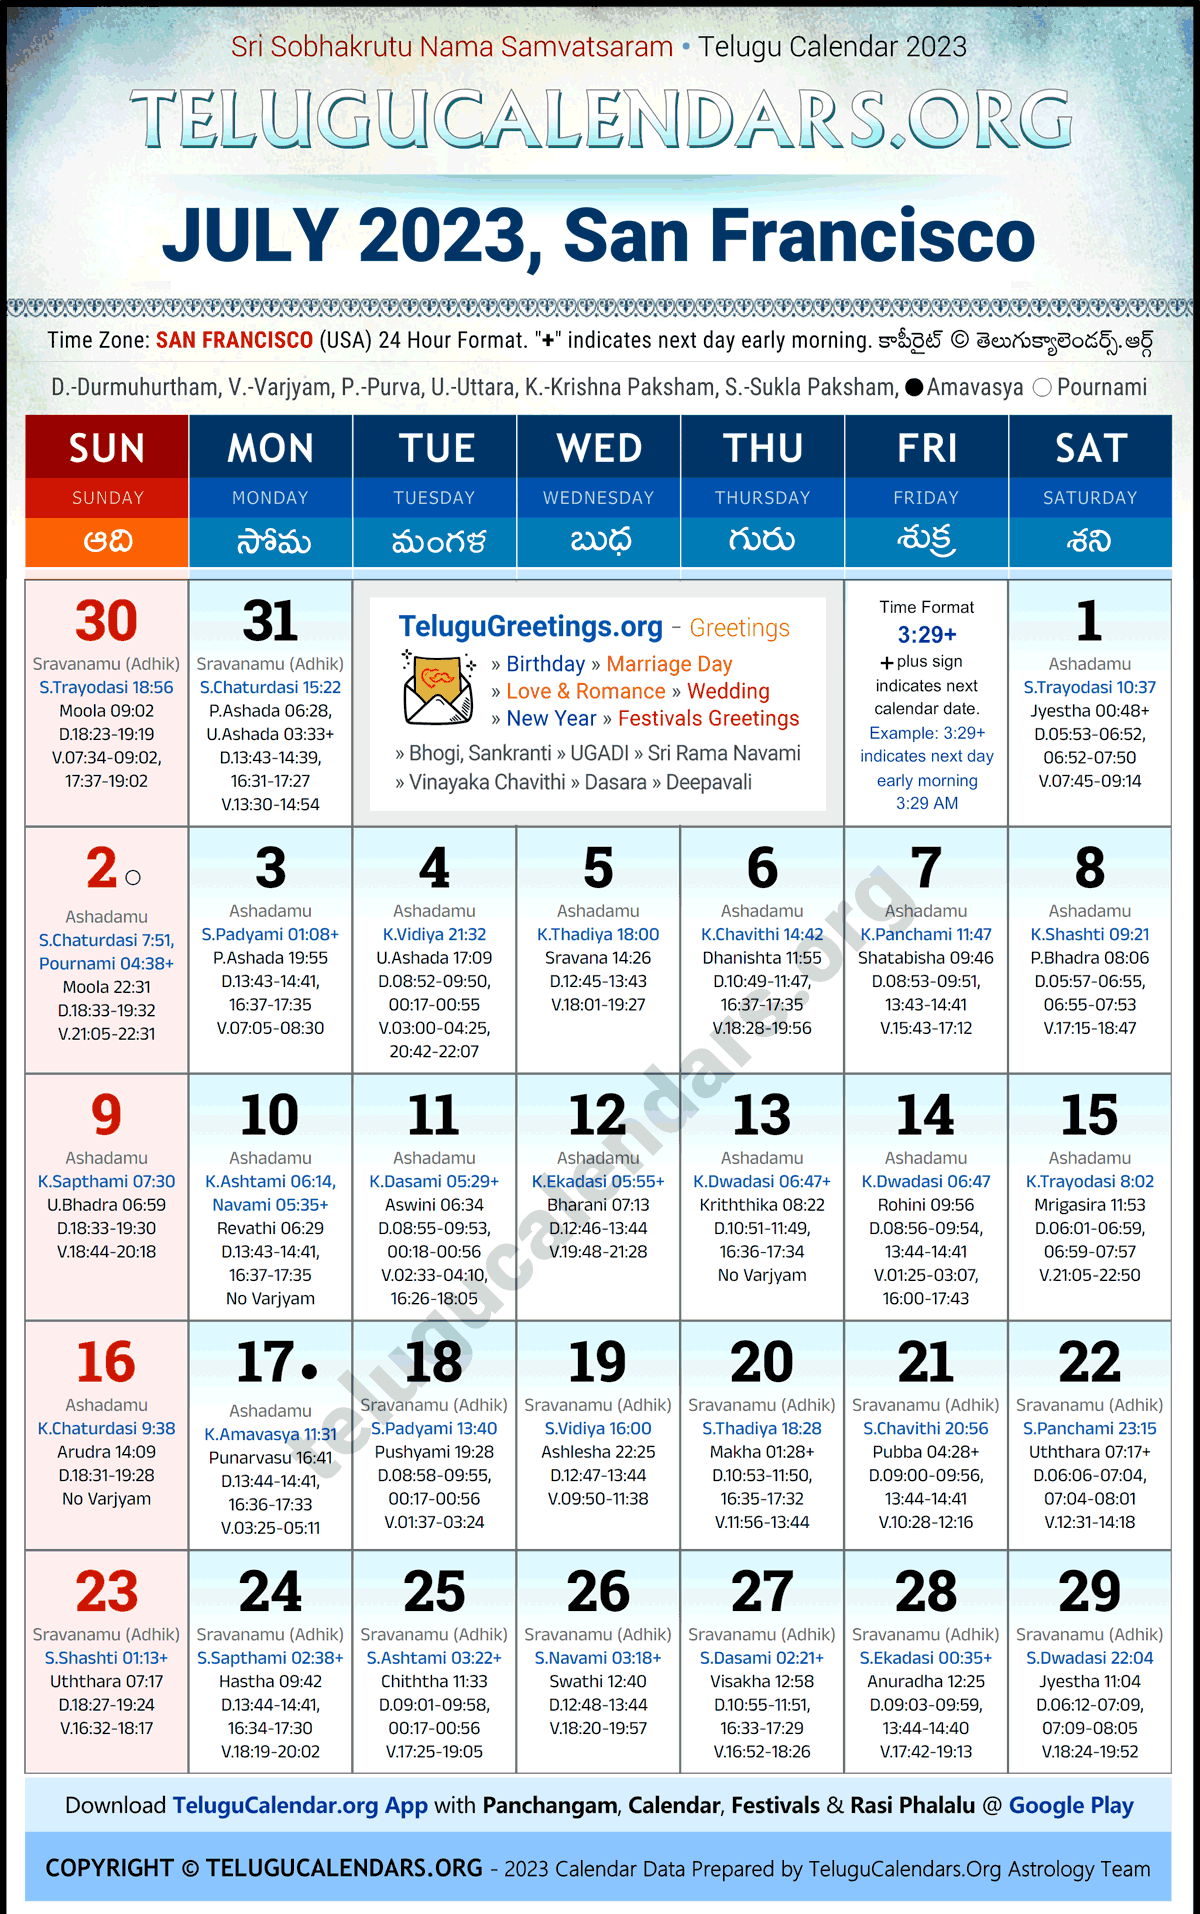 Telugu Calendar 2023 July Festivals for San Francisco